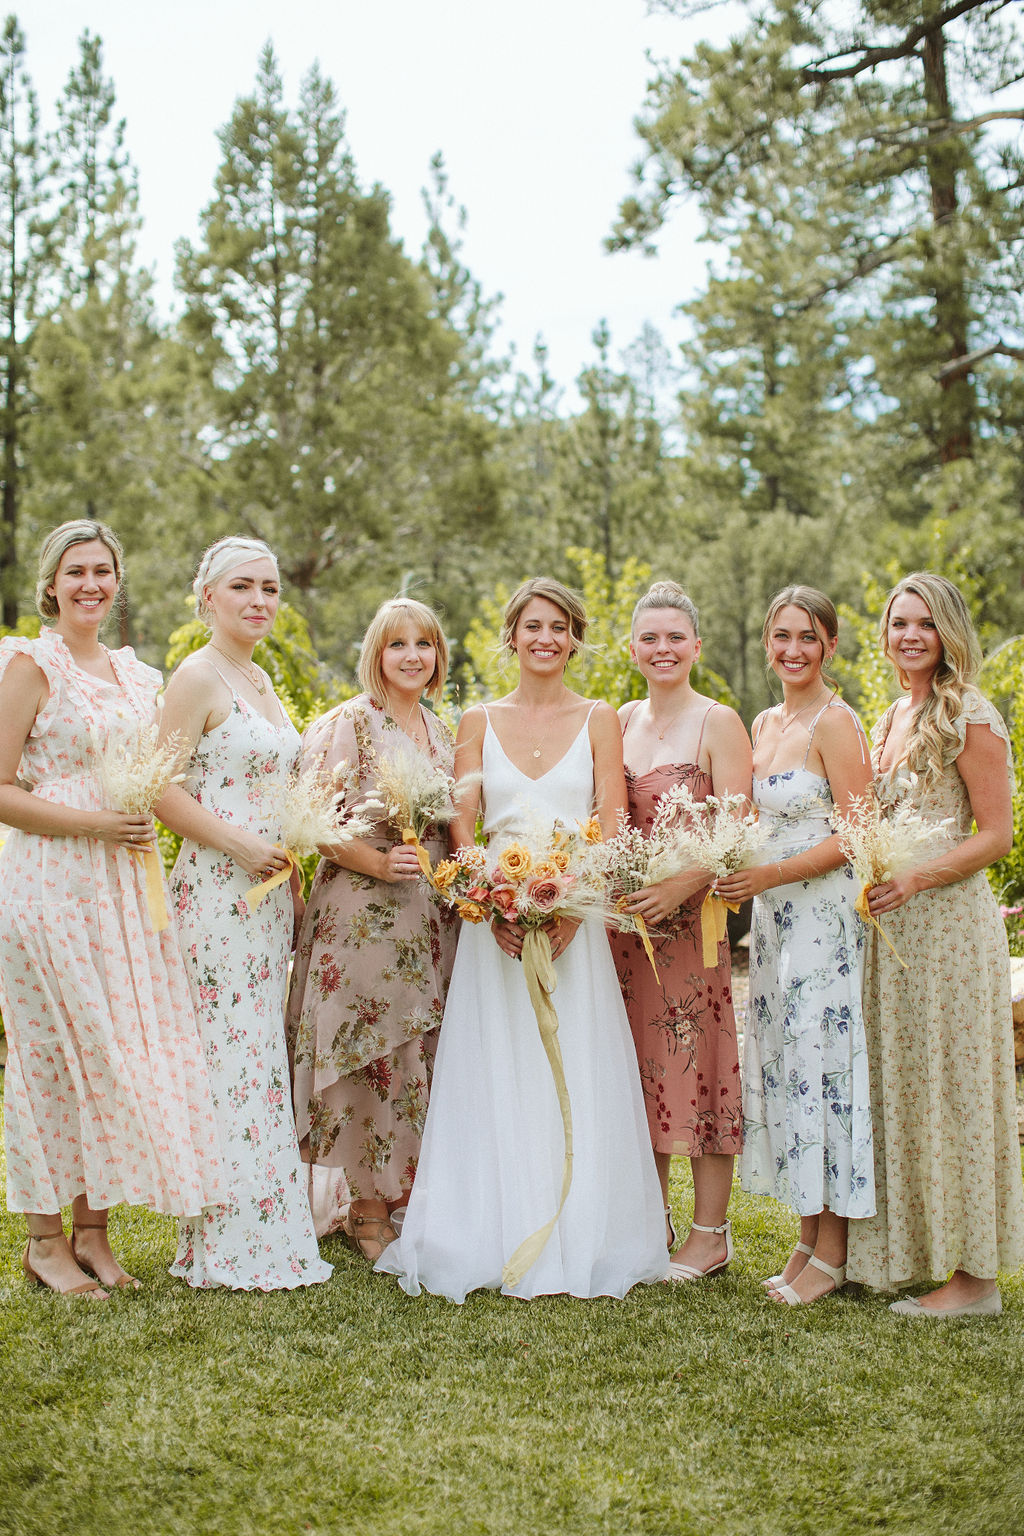 Steph + Austin Hendrix wedding by Paige Jones - floral bridesmaid dresses